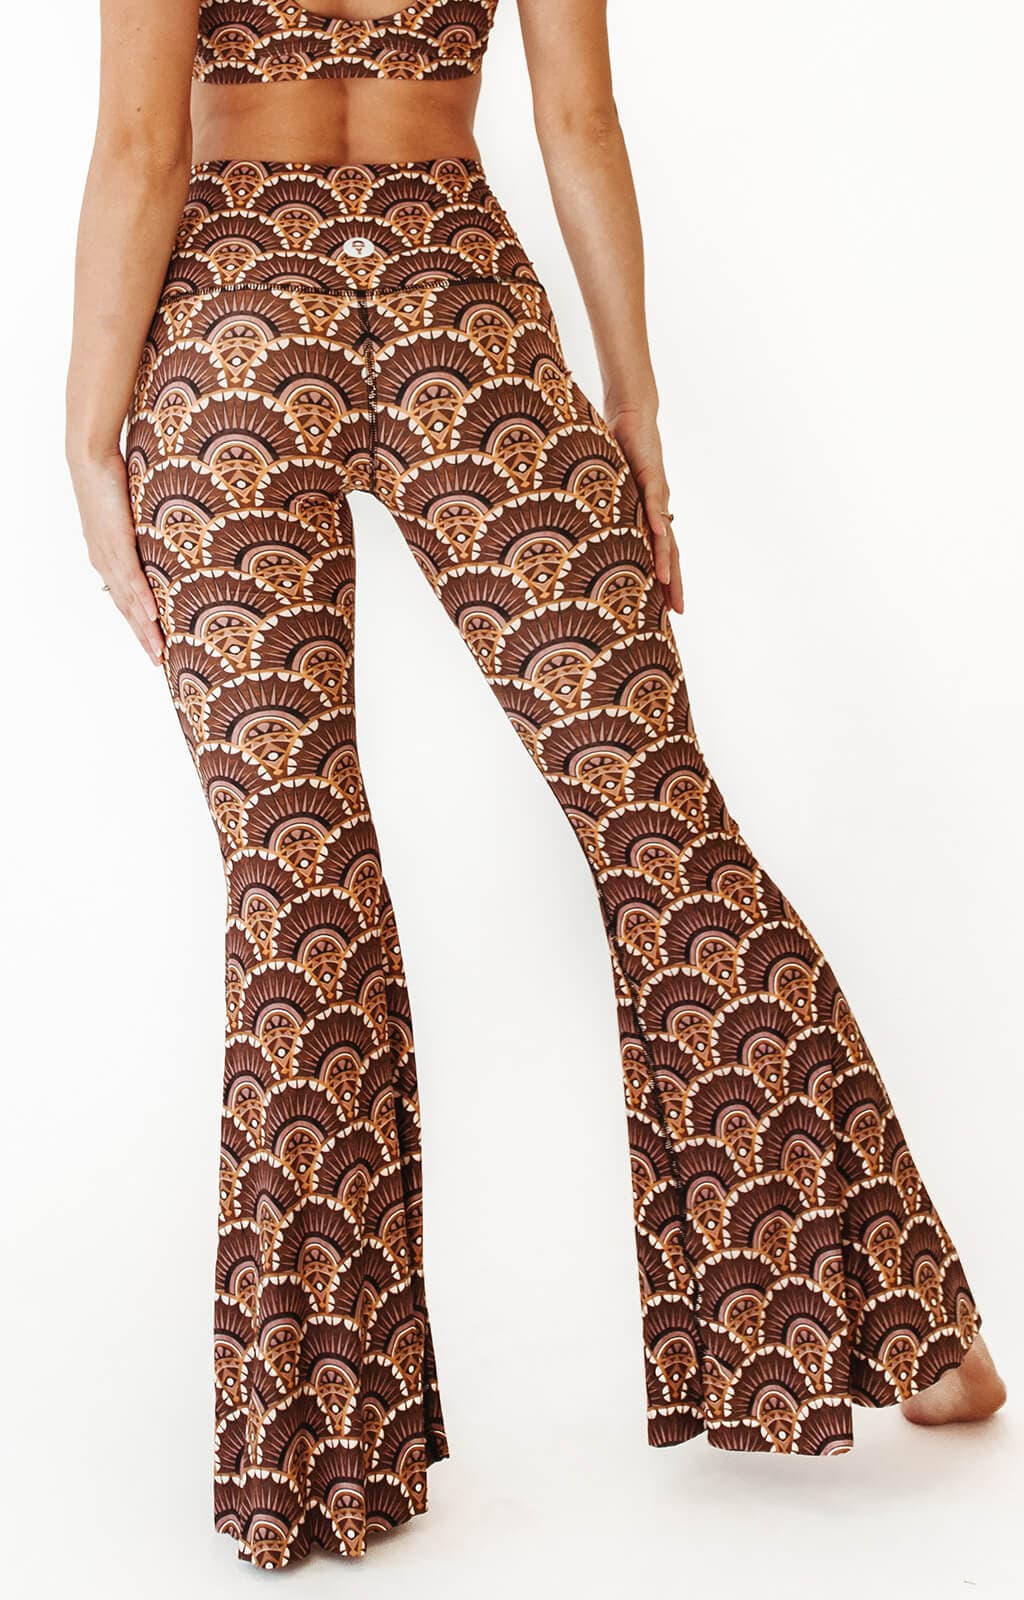 SOLY HUX Women's Print High Waisted Flare Pants Leggings Bell Bottom Wide  Leg Lo | eBay